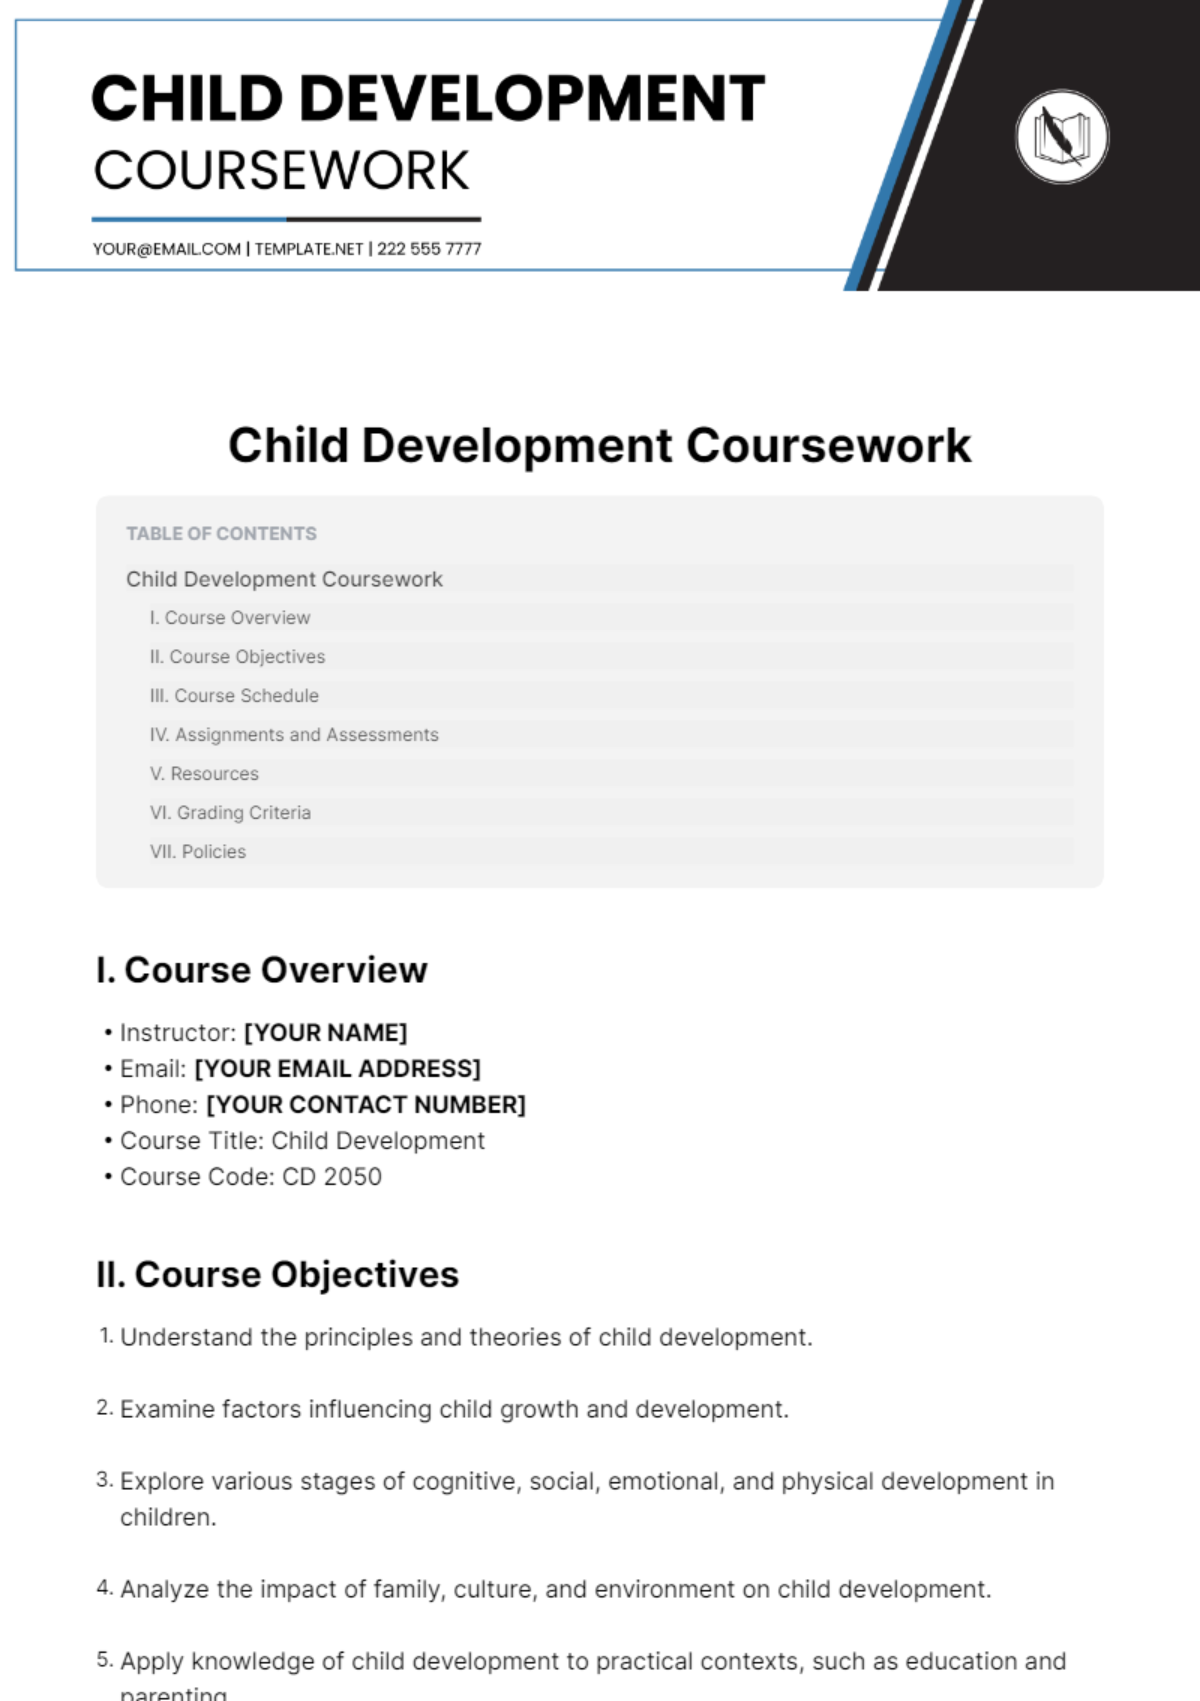 Child Development Coursework Template